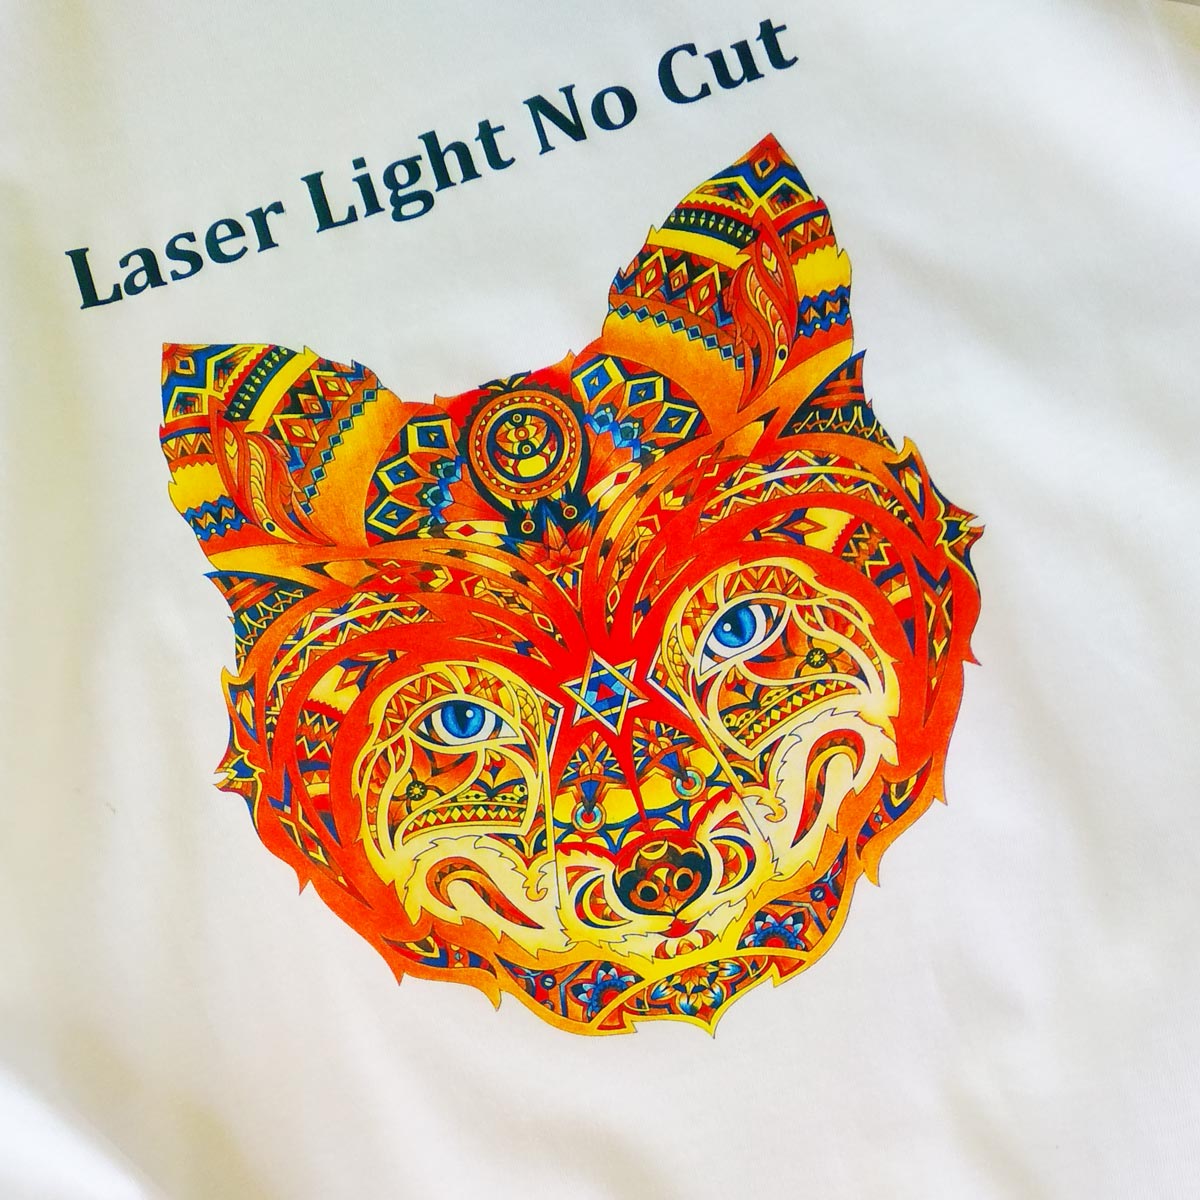 Laser Light No Cut - Transfer paper for light textiles for white toner printers